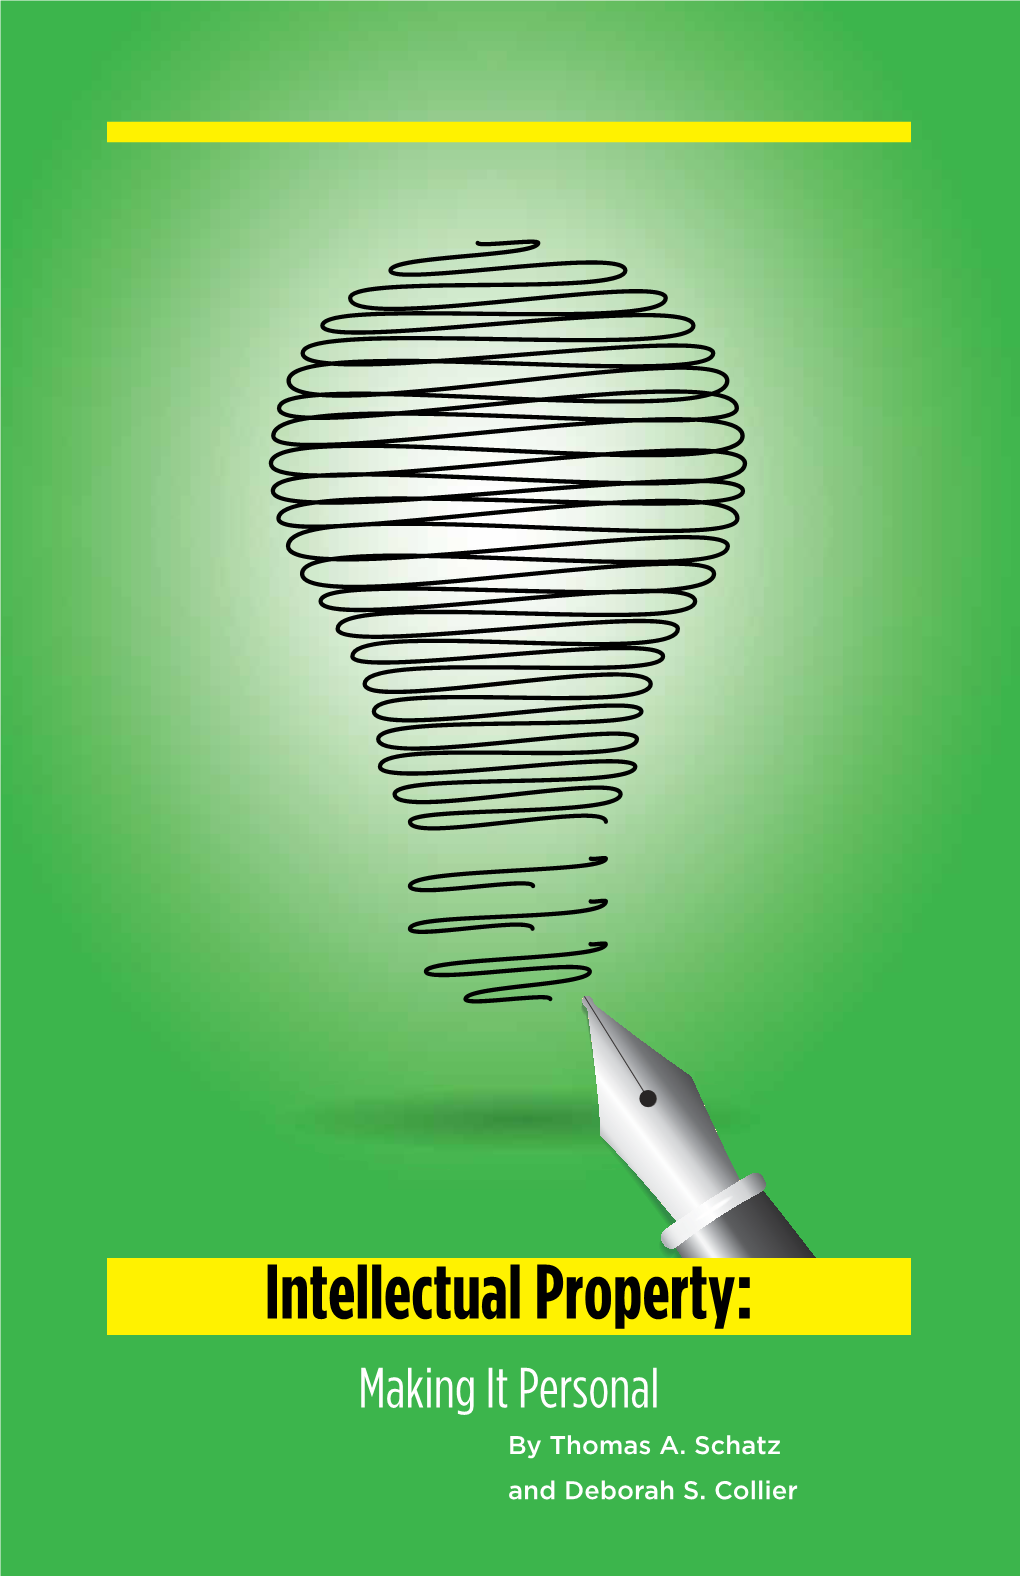 Intellectual Property: Making It Personal by Thomas A